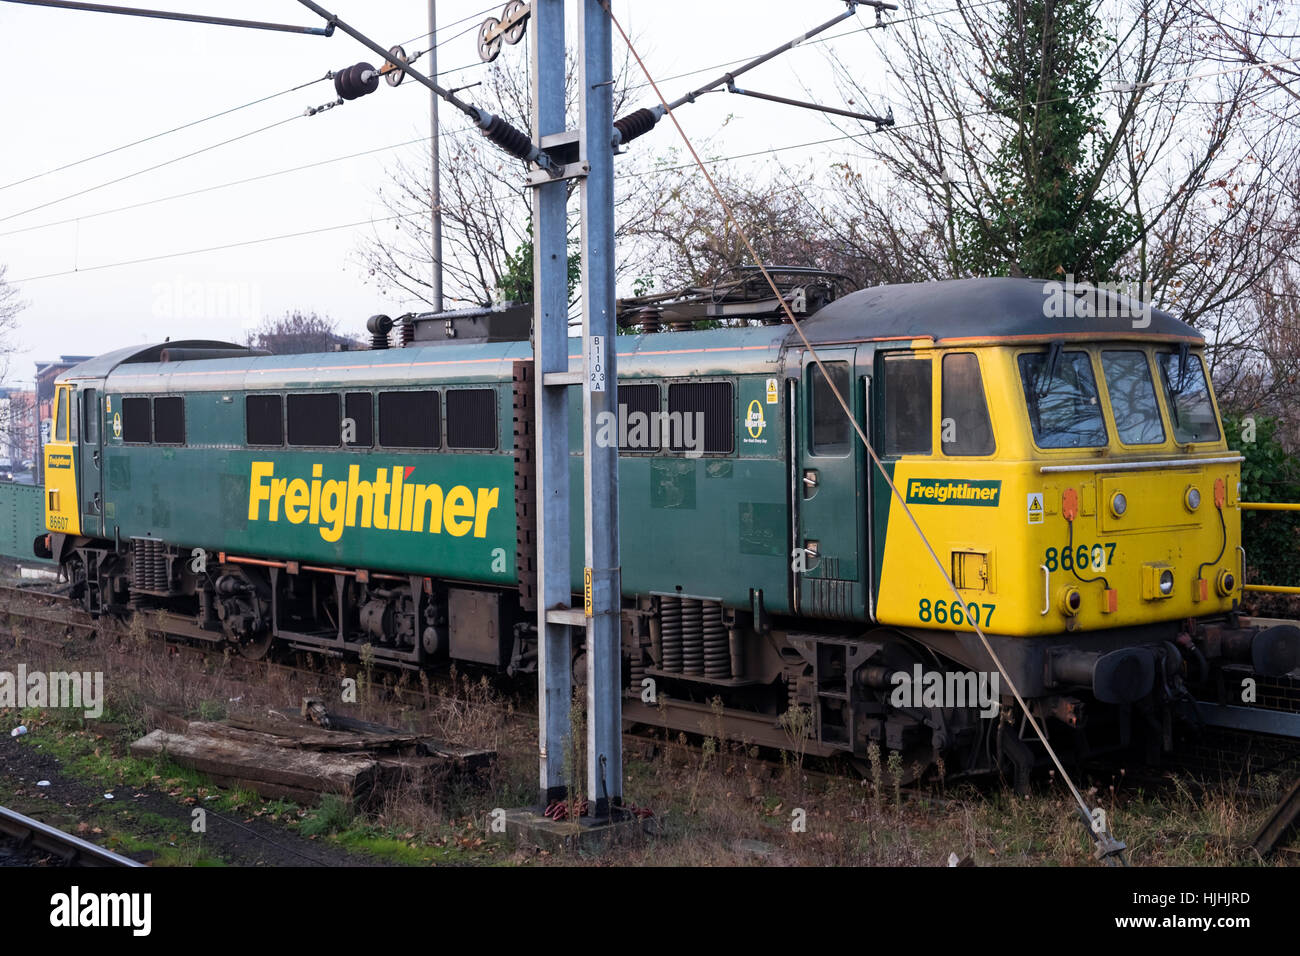 Freightliner class 86 electric locomotive Stock Photo